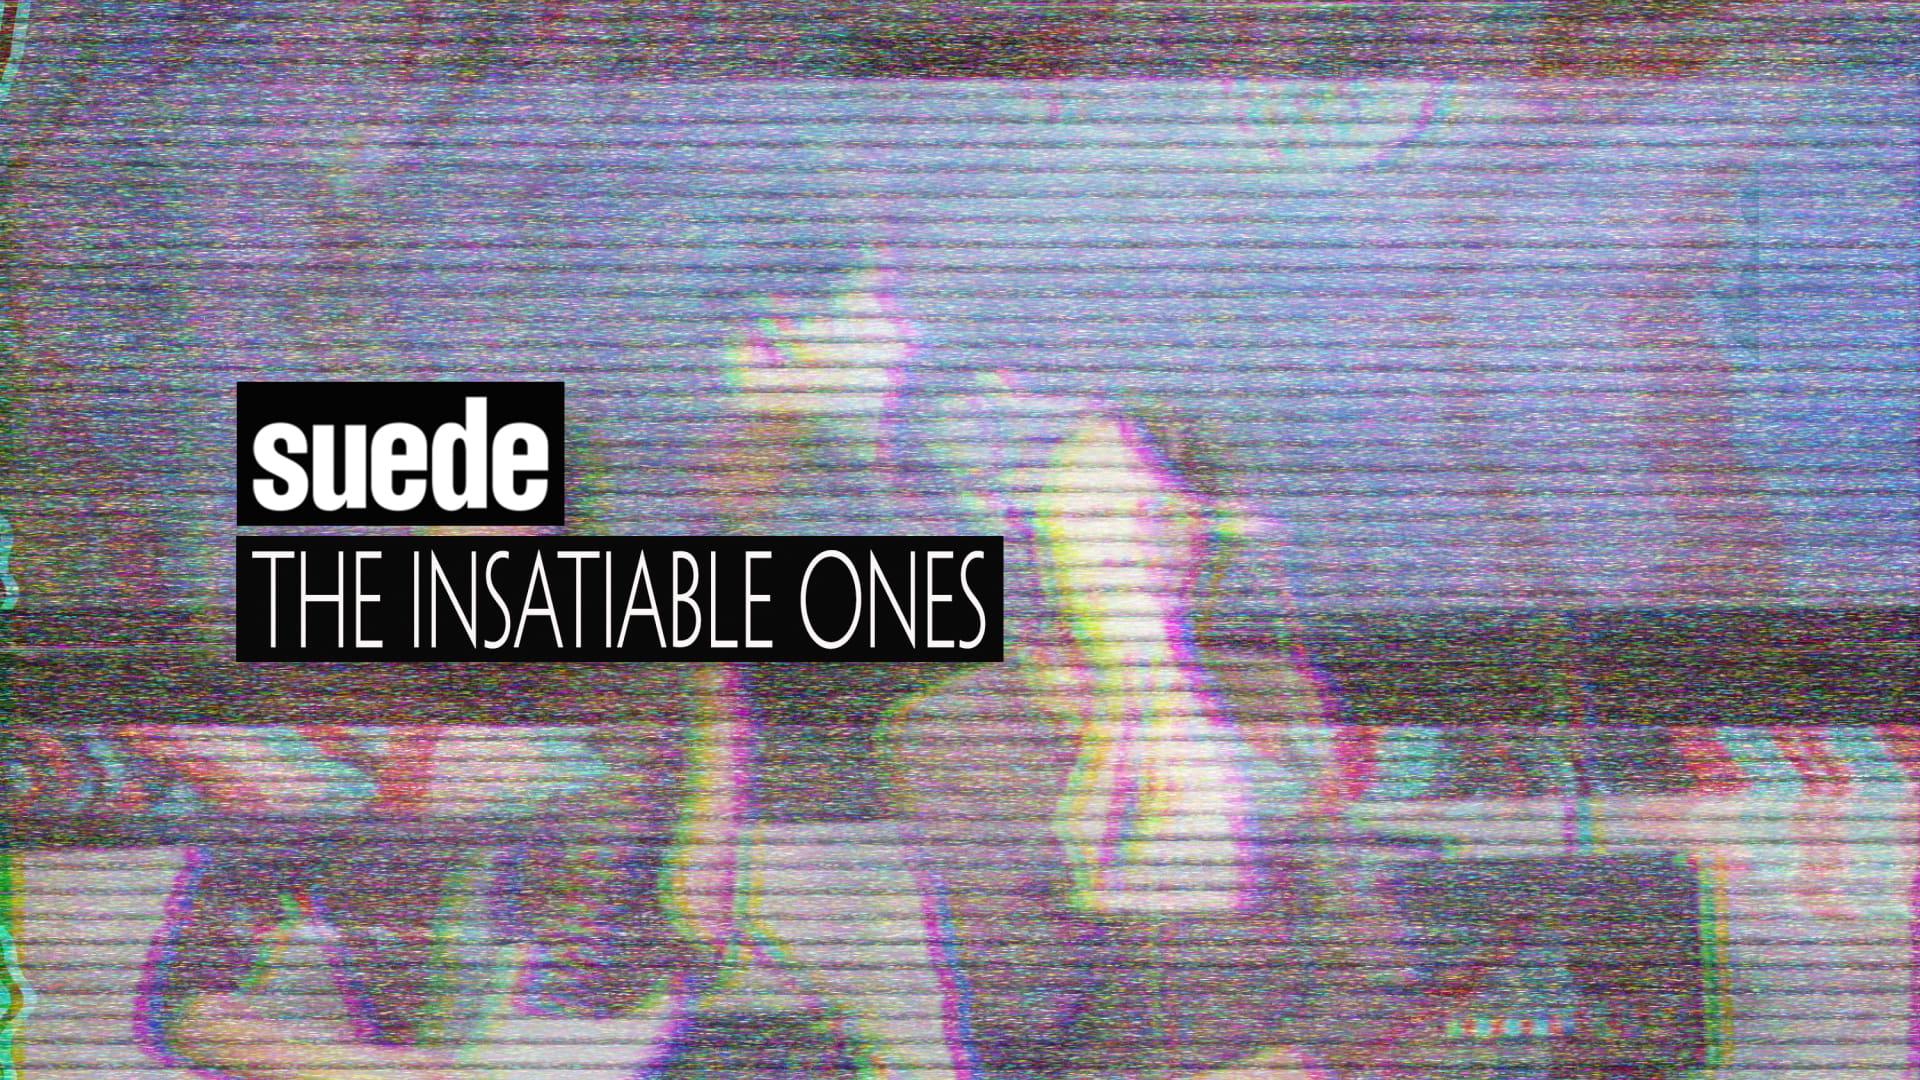 Suede: The Insatiable Ones backdrop